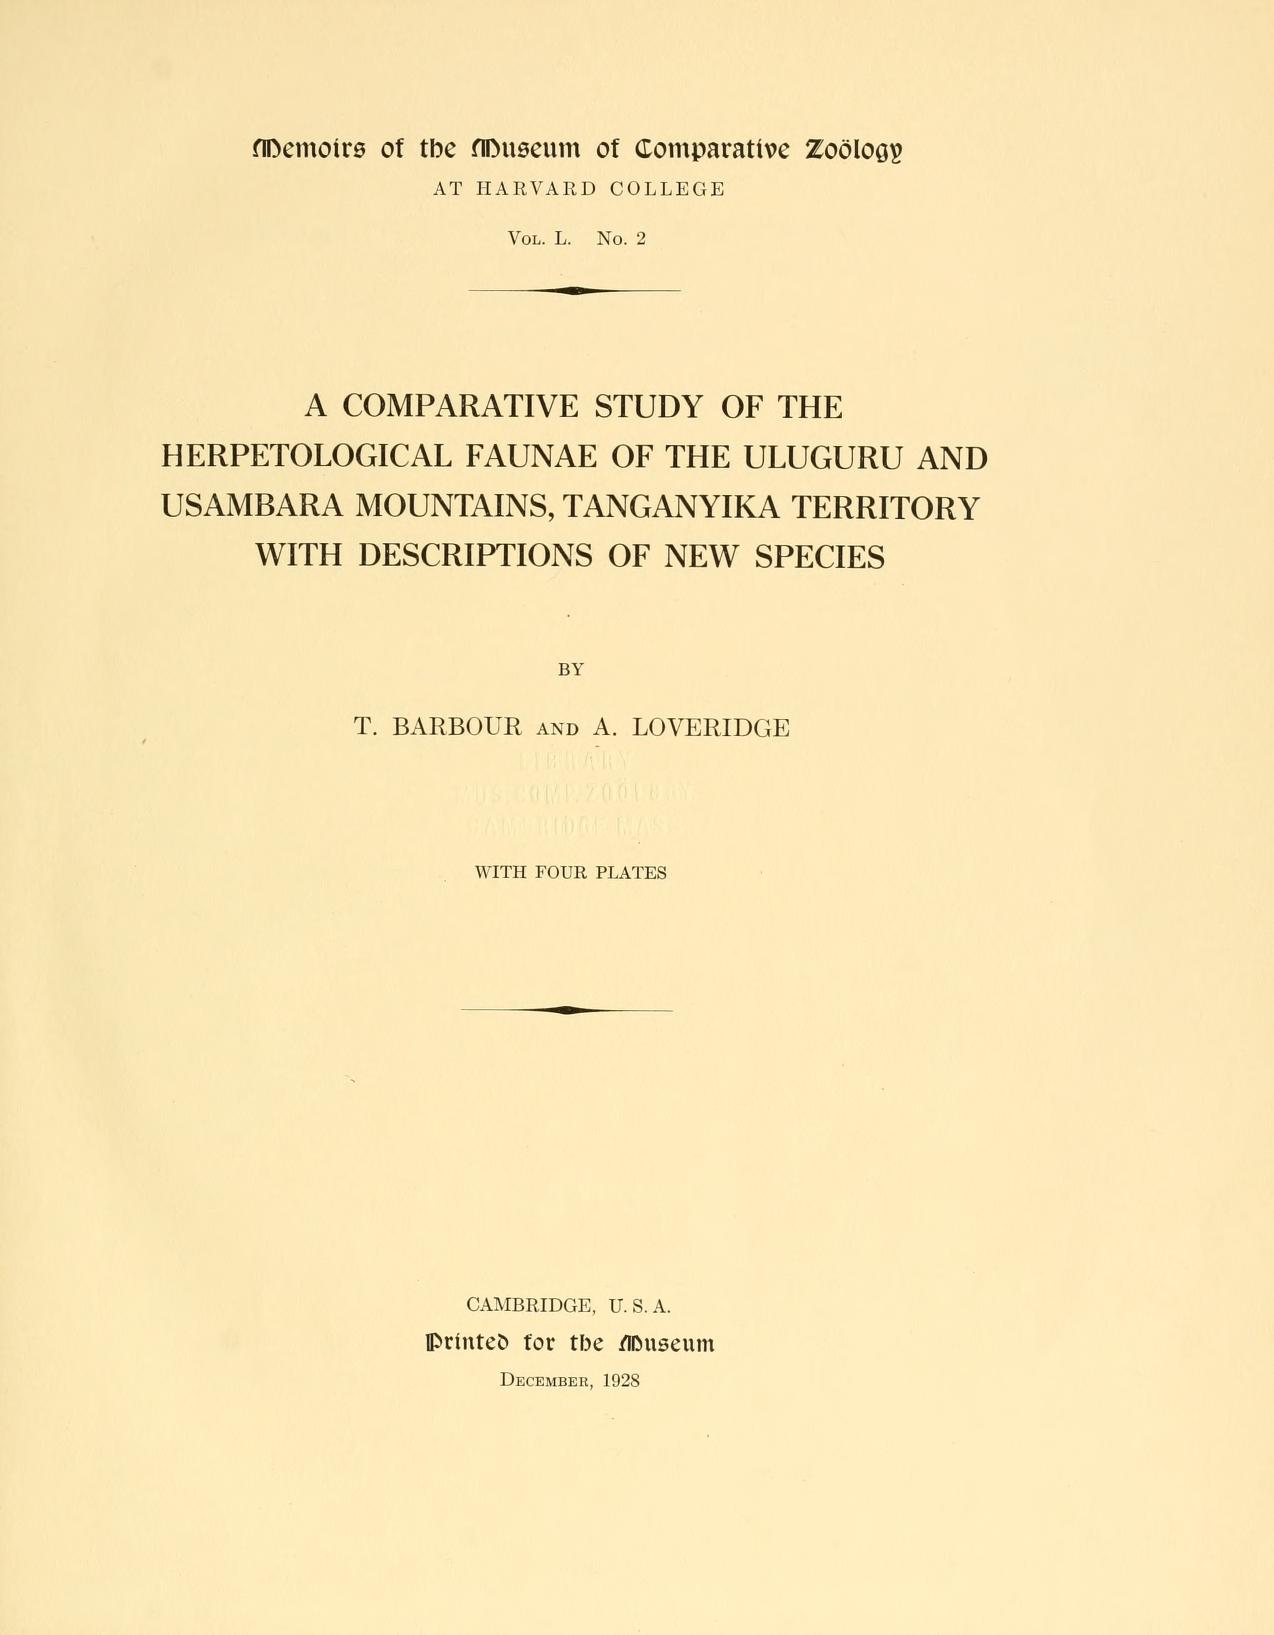 Media of type text, Barbour and Loveridge 1928. Description:MCZ Memoirs Vol. L No. 2